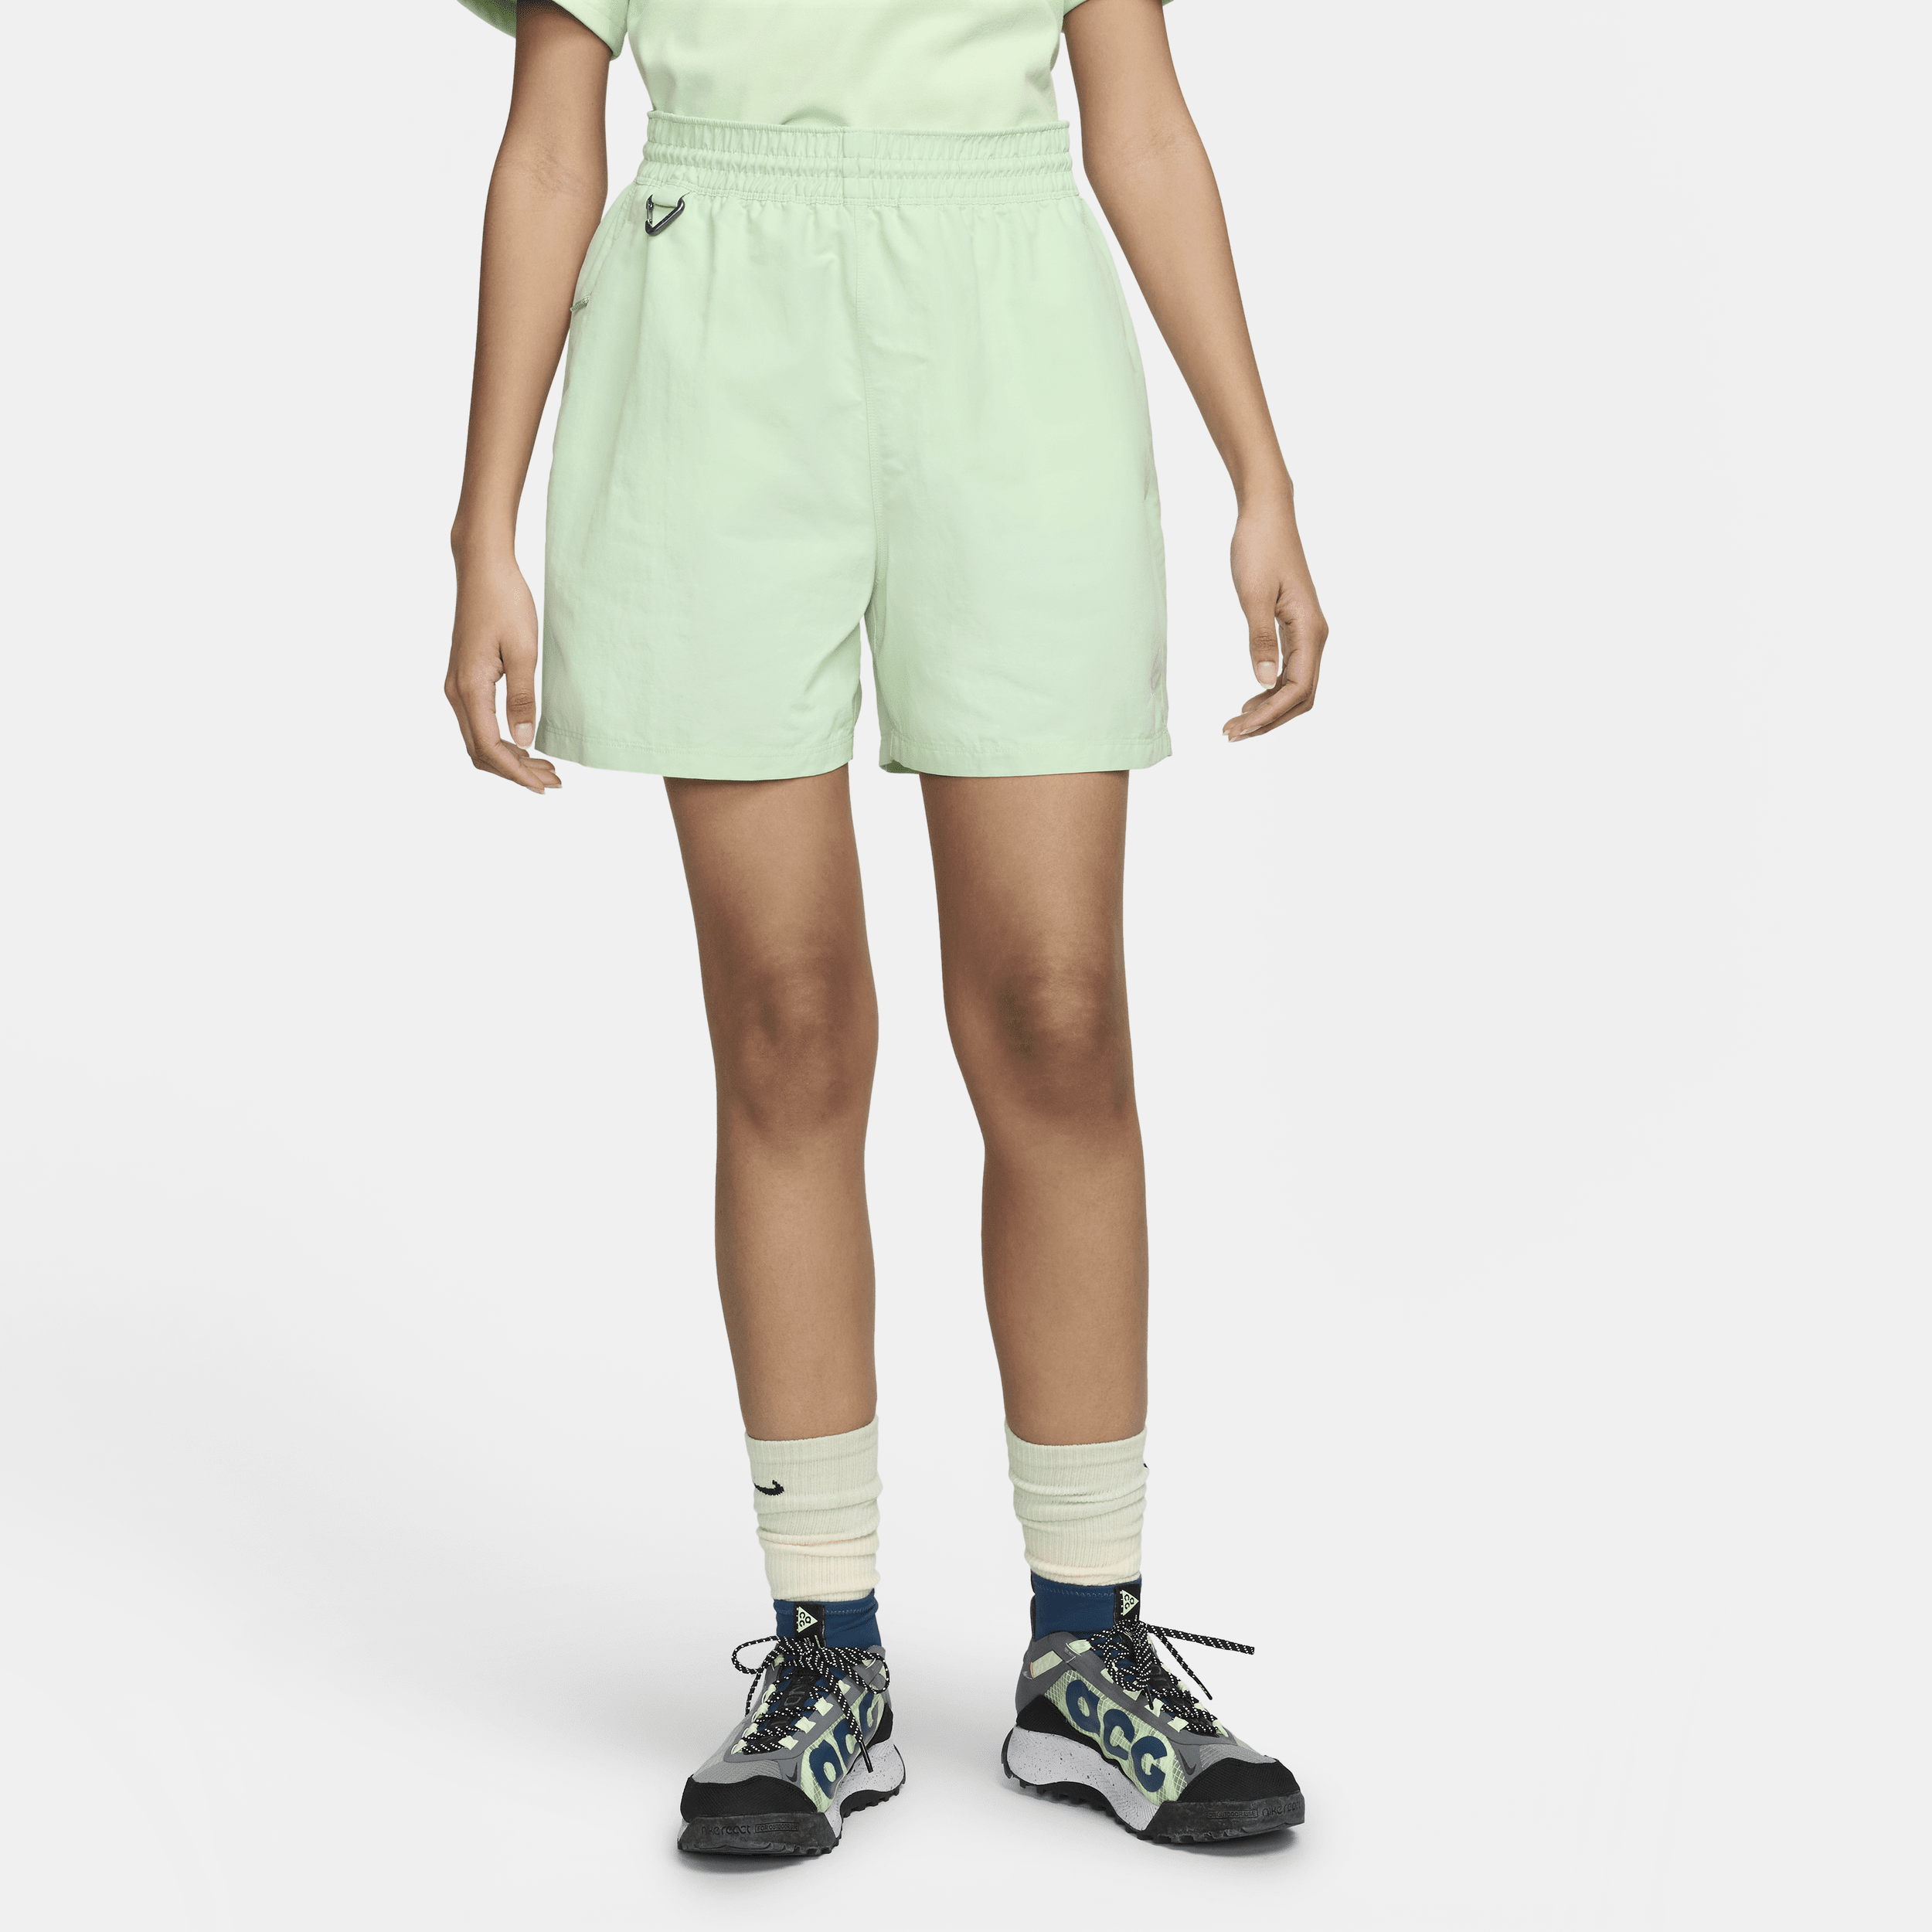 Nike ACG-shorts (13 cm) til kvinder - grøn